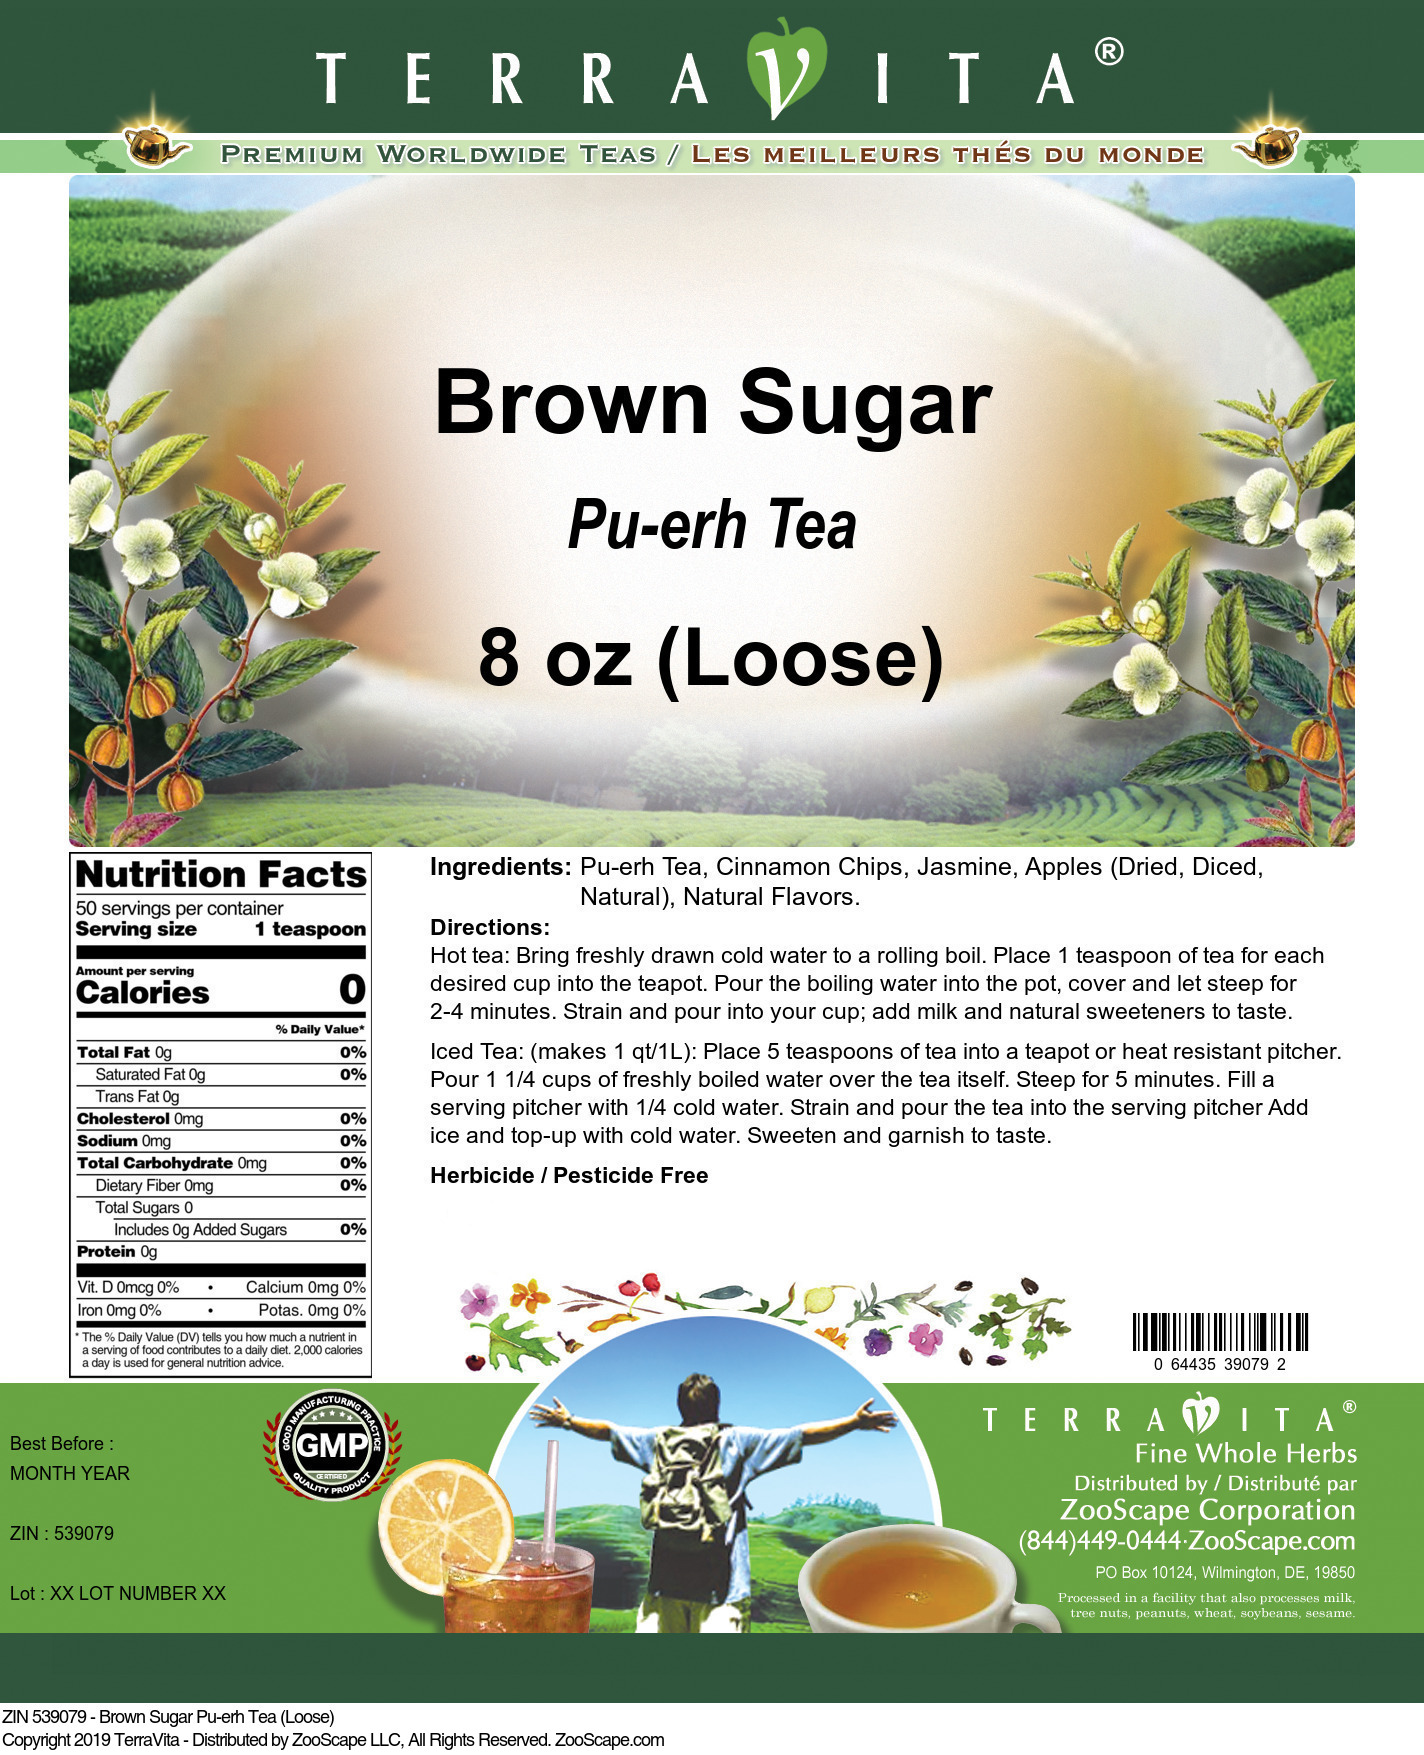 Brown Sugar Pu-erh Tea (Loose) - Label